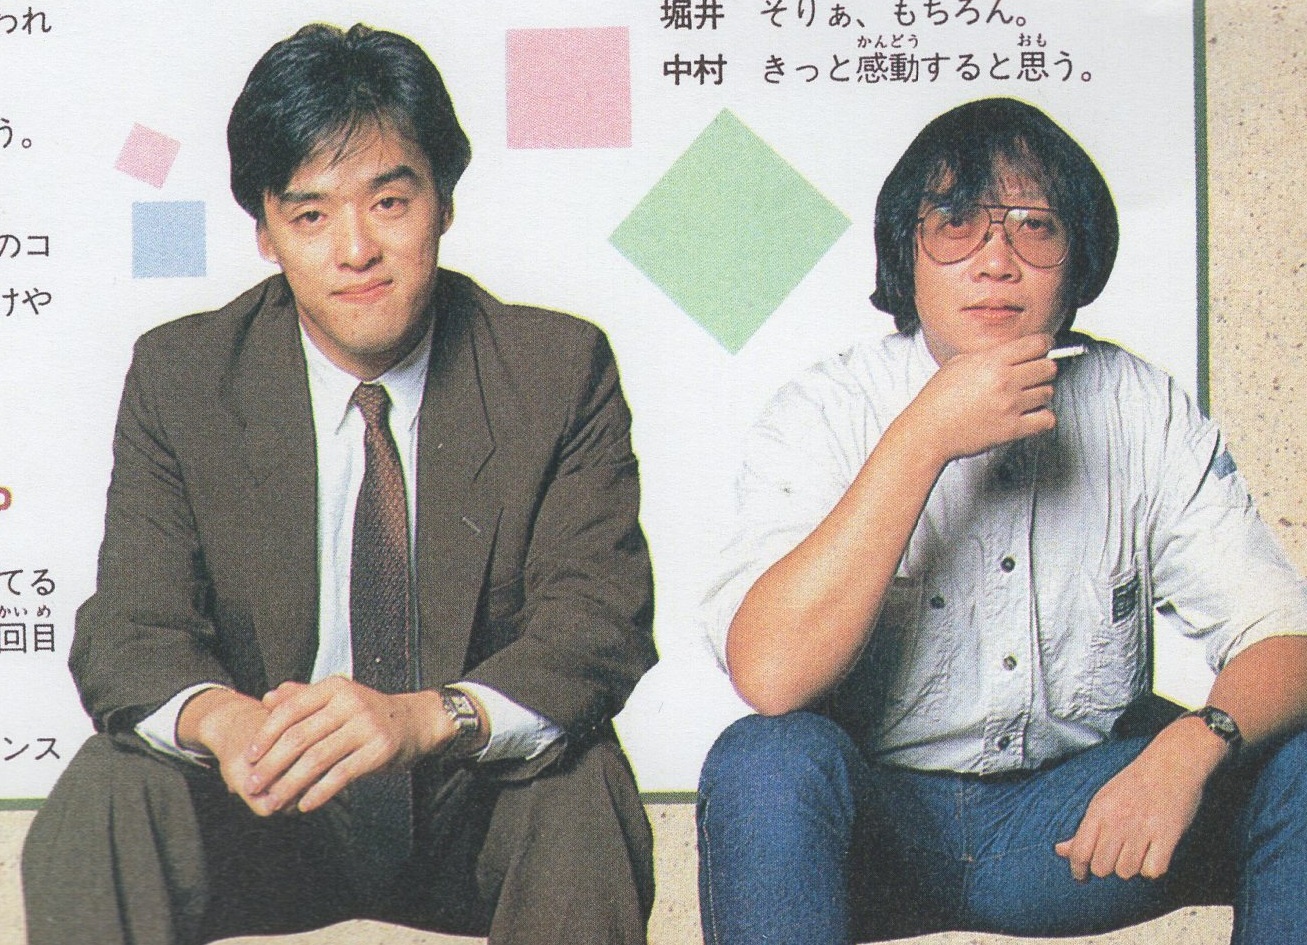 Dragon Quest's developers, Koichi Nakamura (left) and Yuji Horii (right)